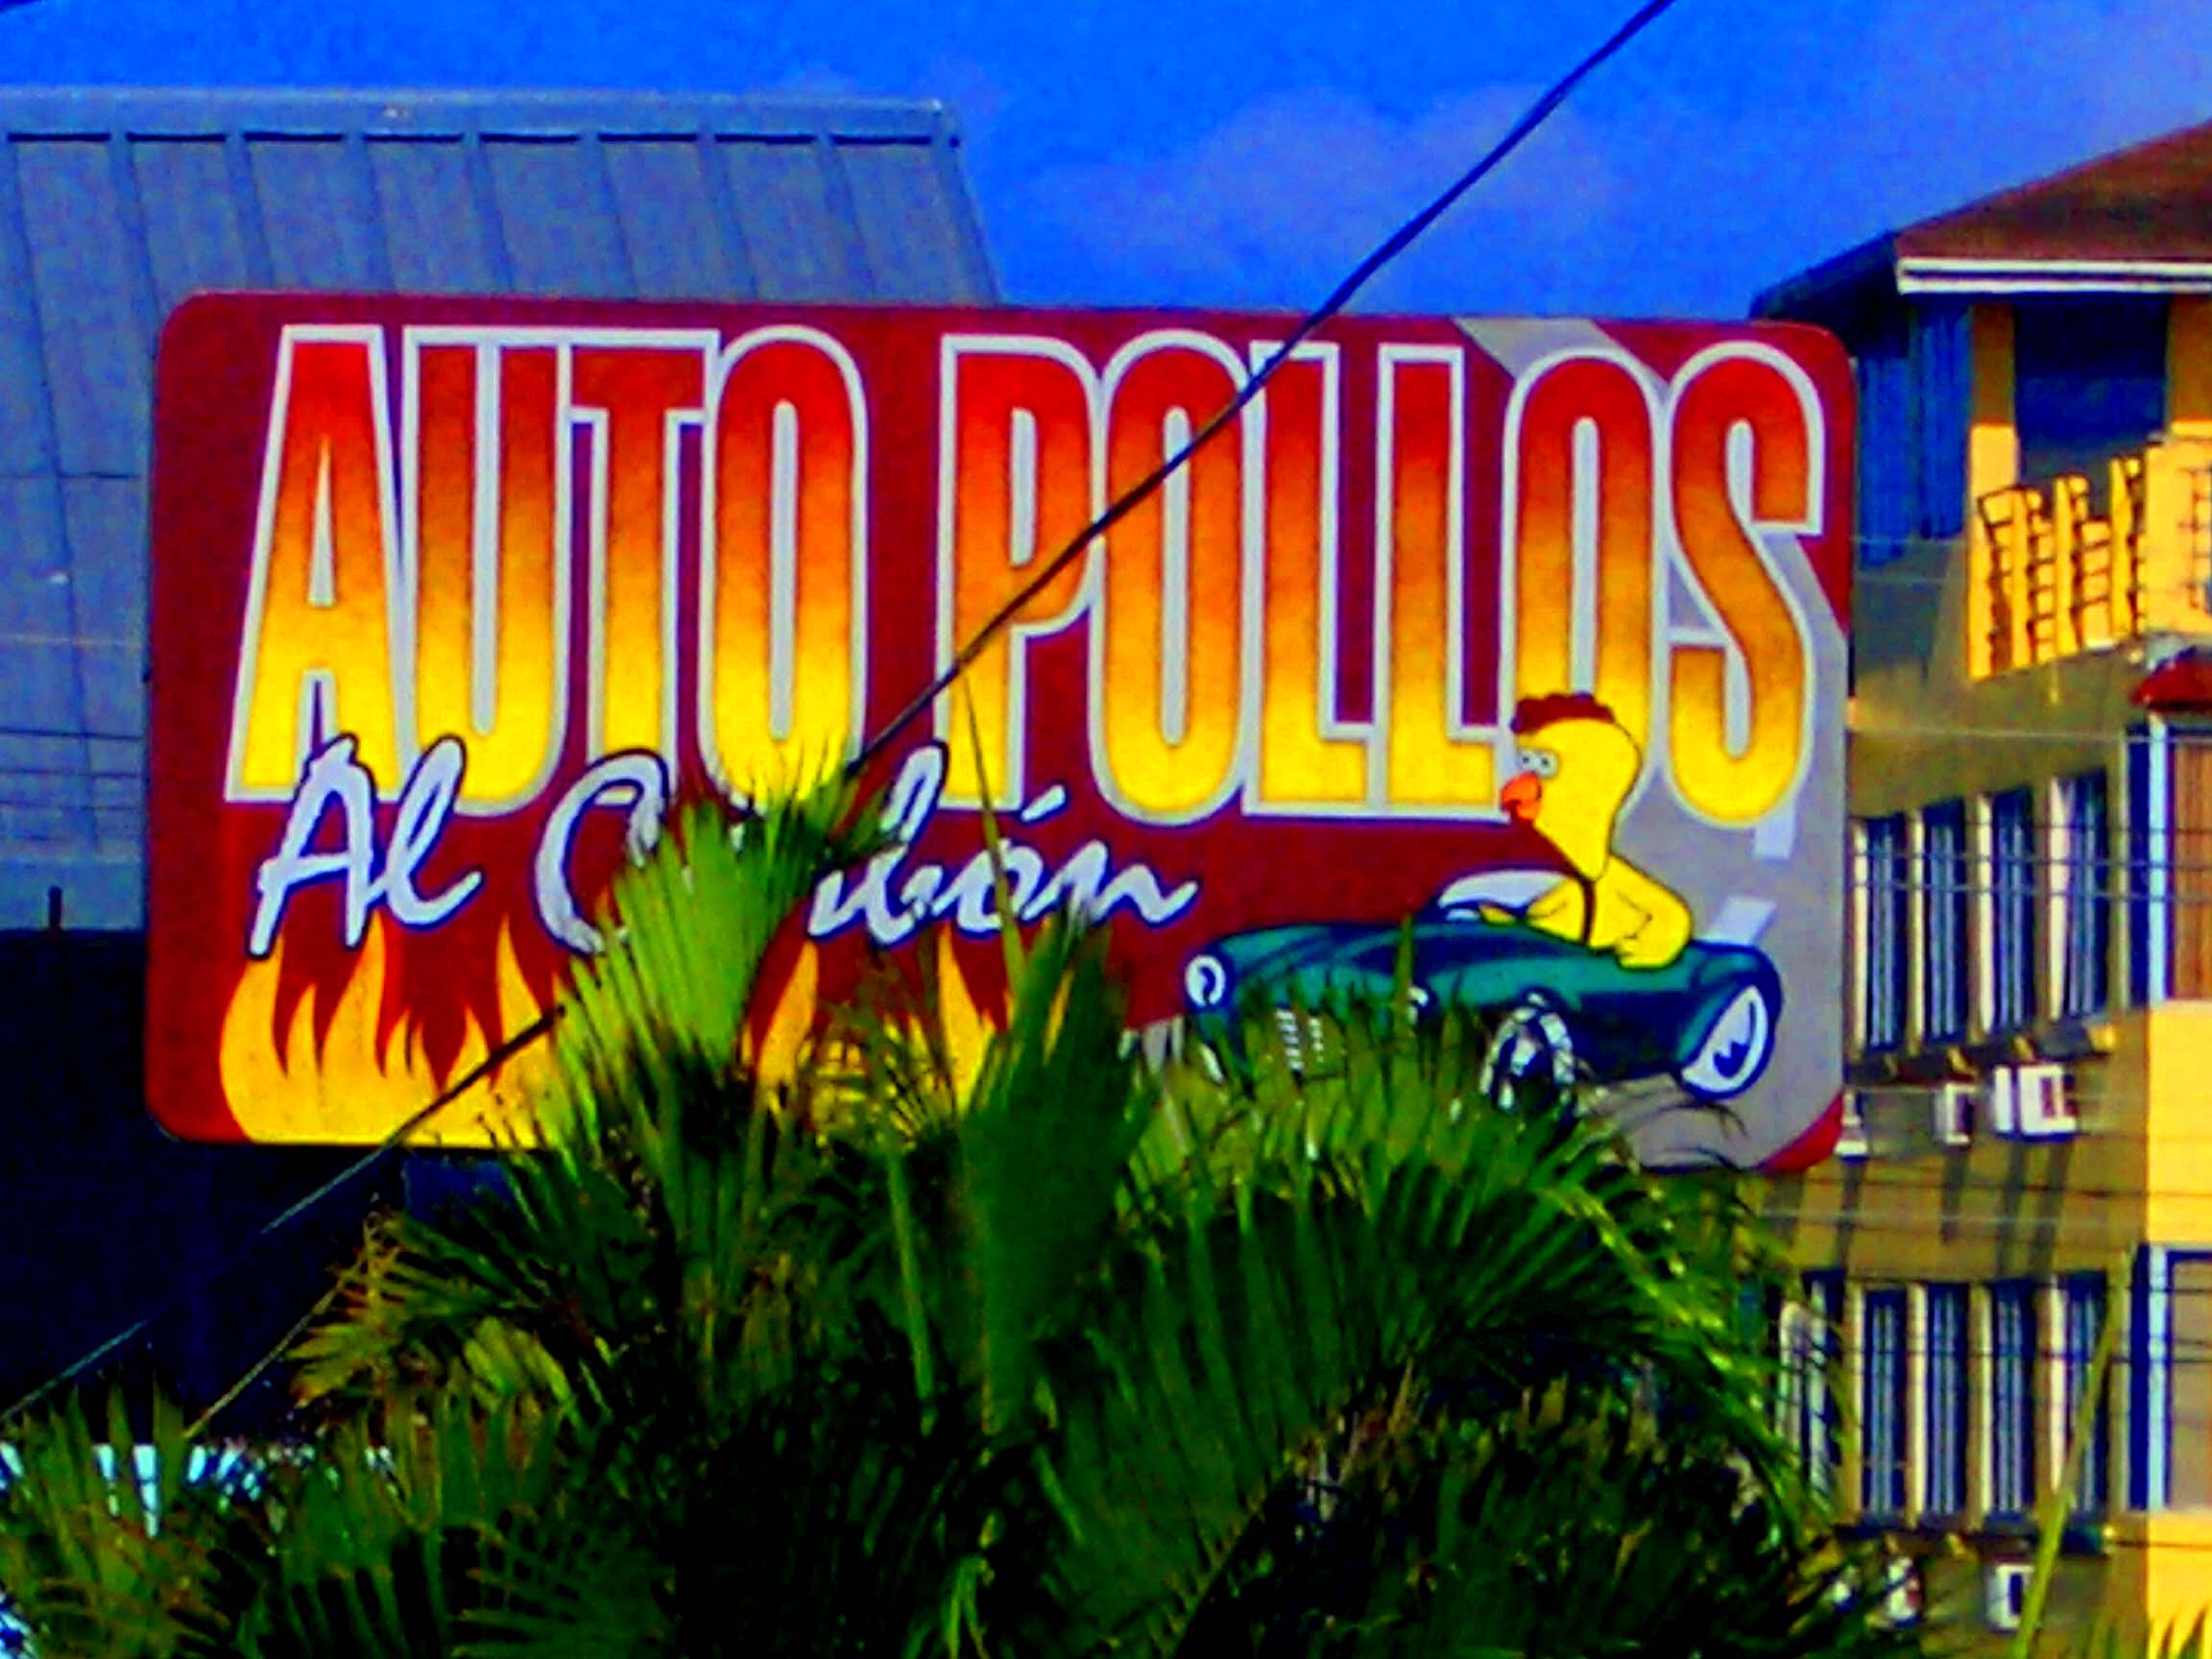 The sign for the Auto Pollos al Carbón restaurant in Tela, Honduras.